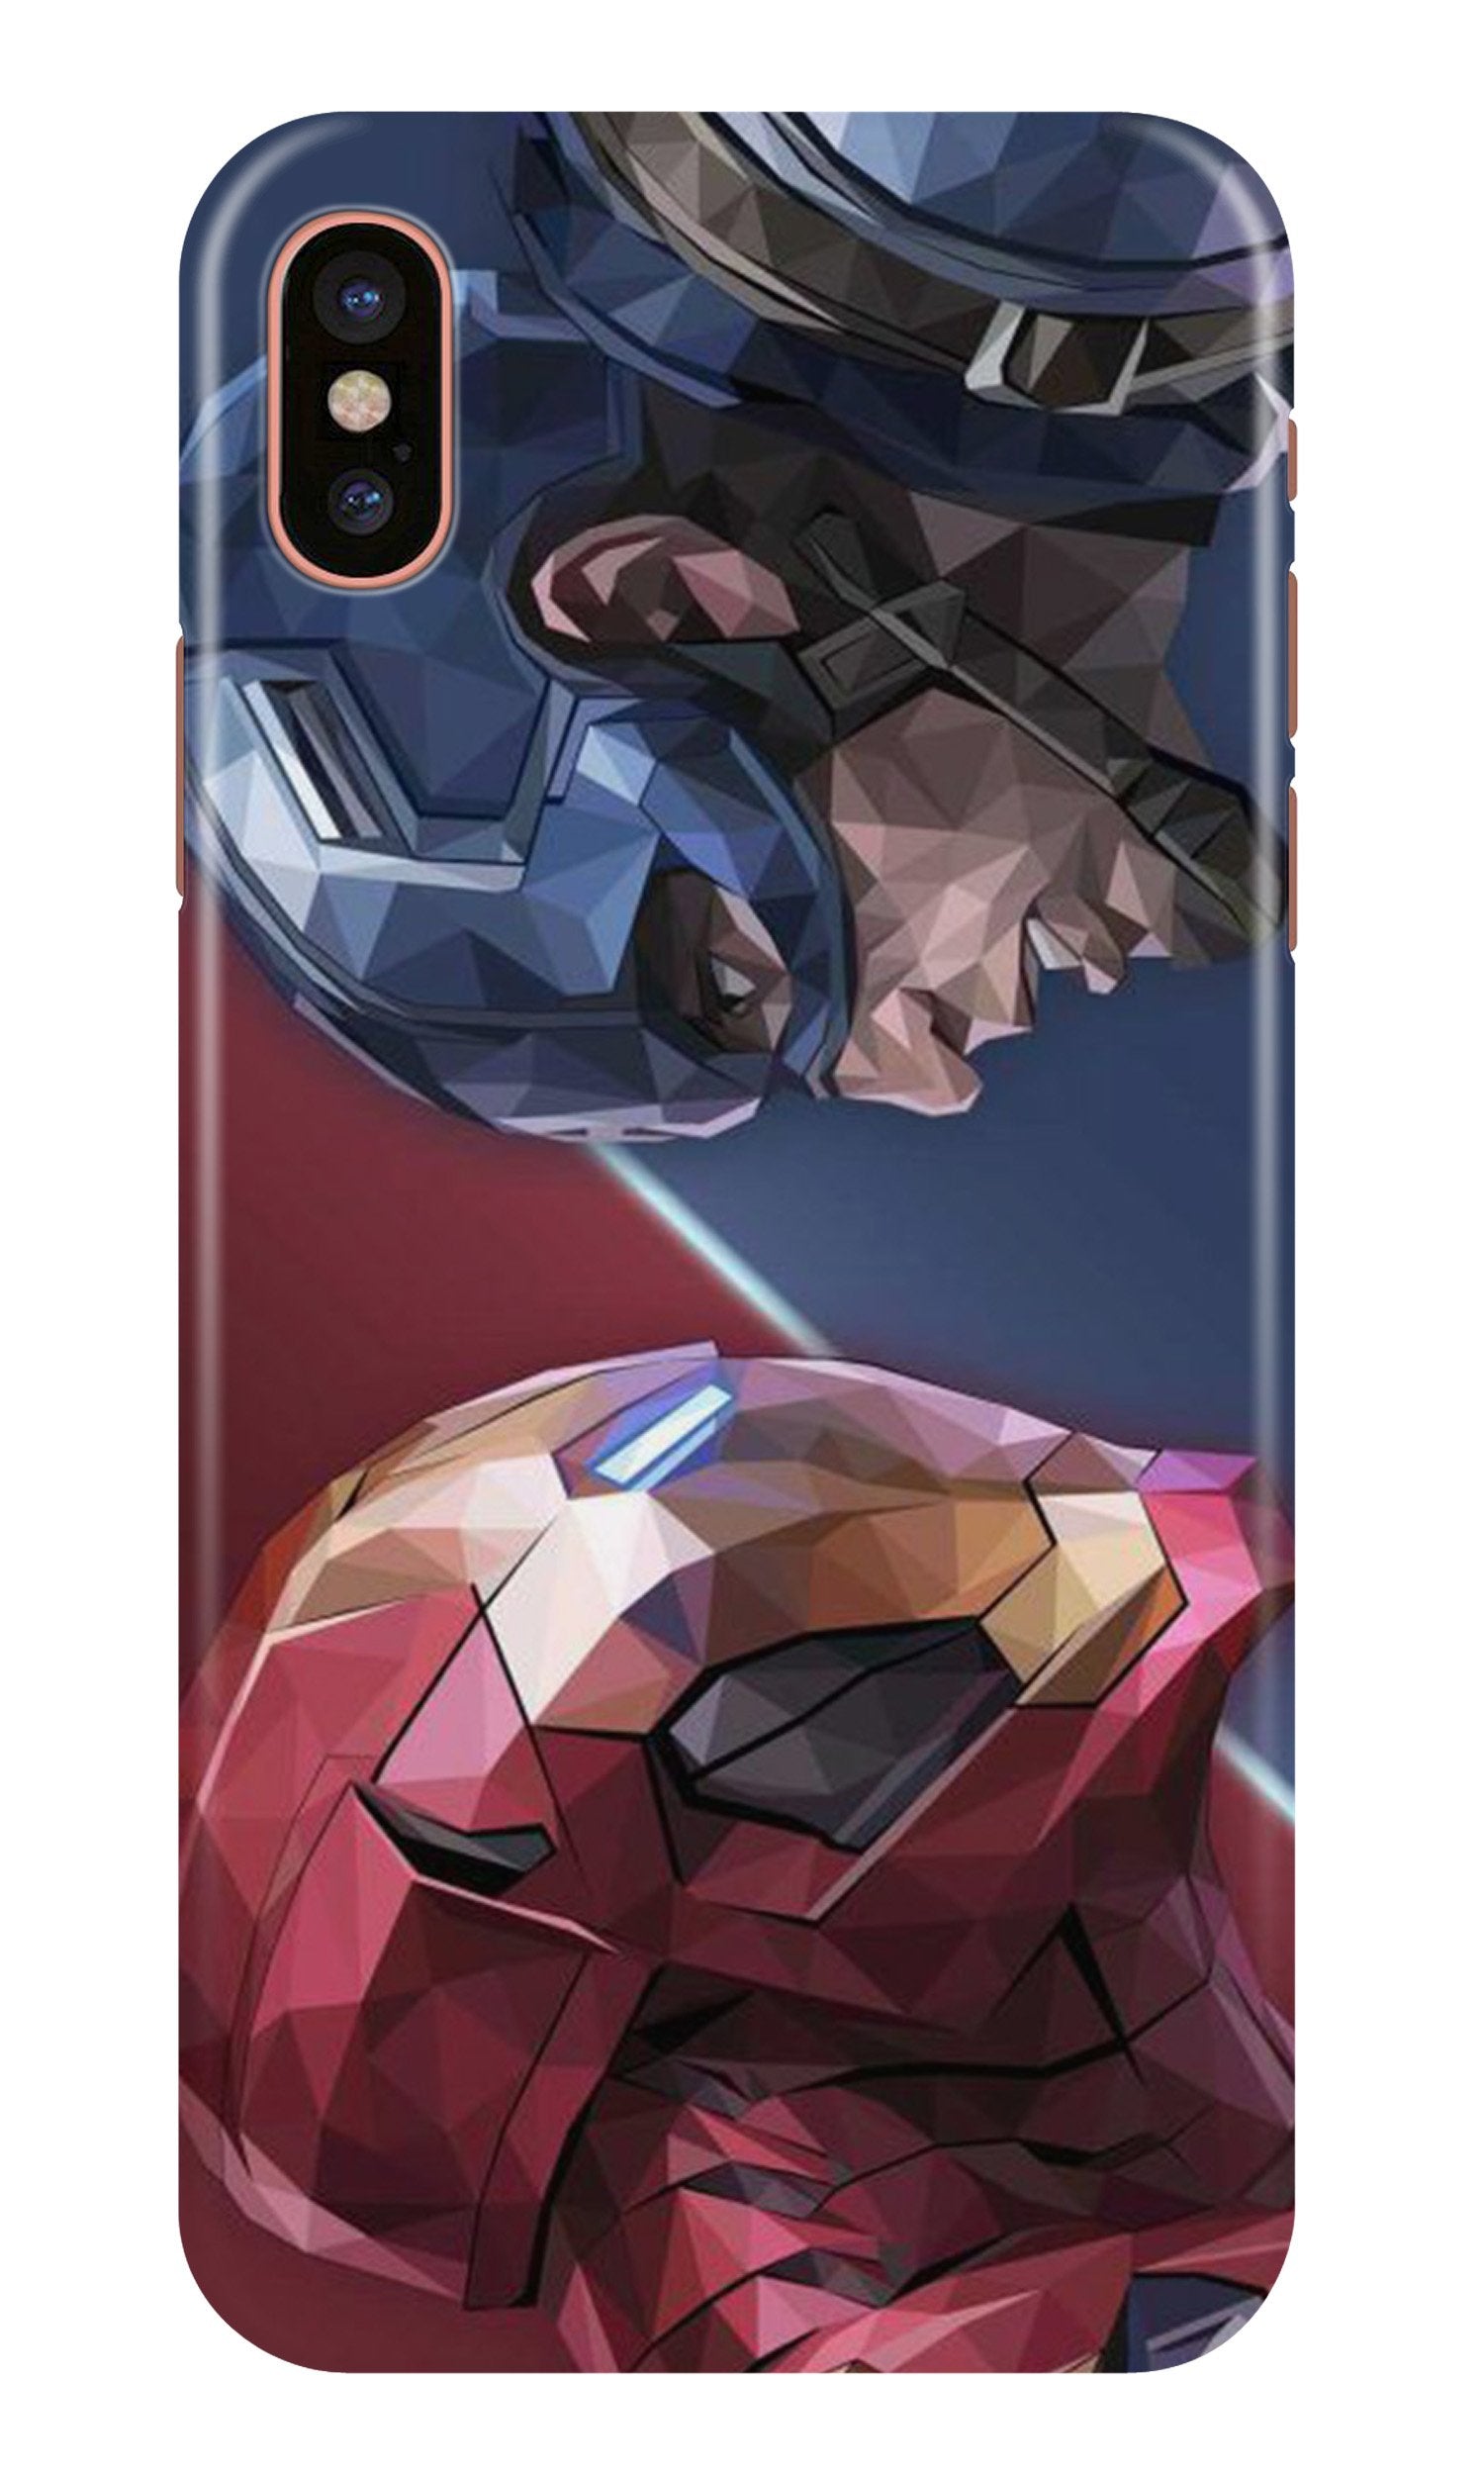 Ironman Captain America Case for iPhone Xs Max (Design No. 245)